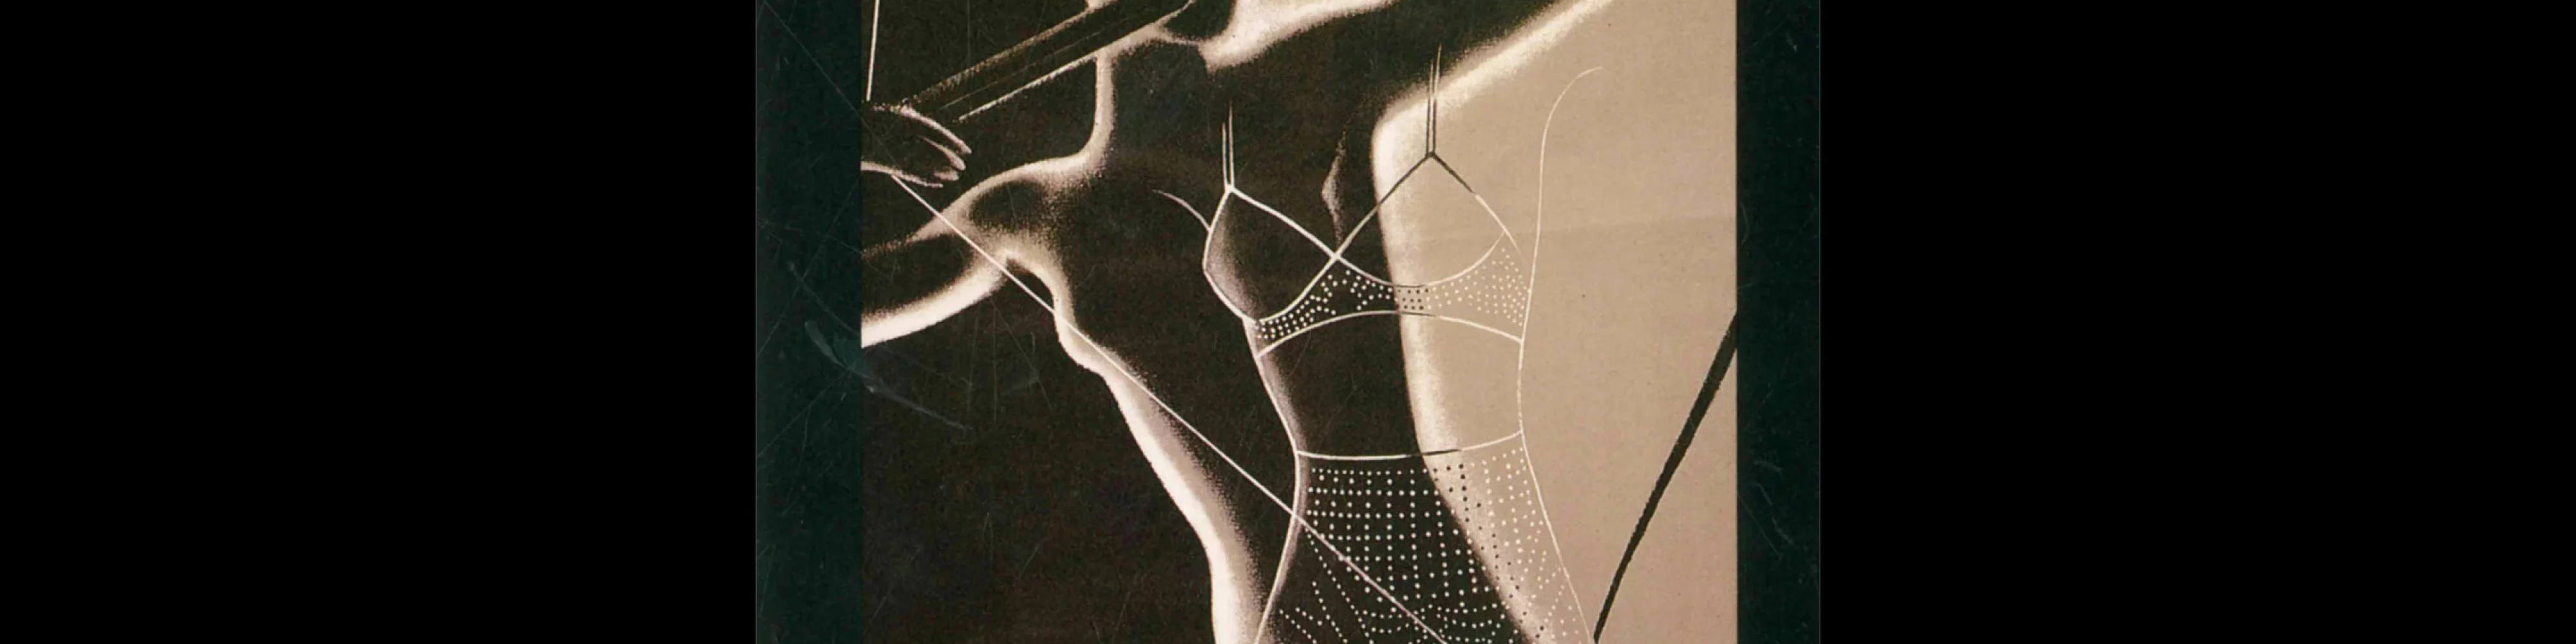 Postcard - Charnaux Corsets Poster (1936), Hans Schleger